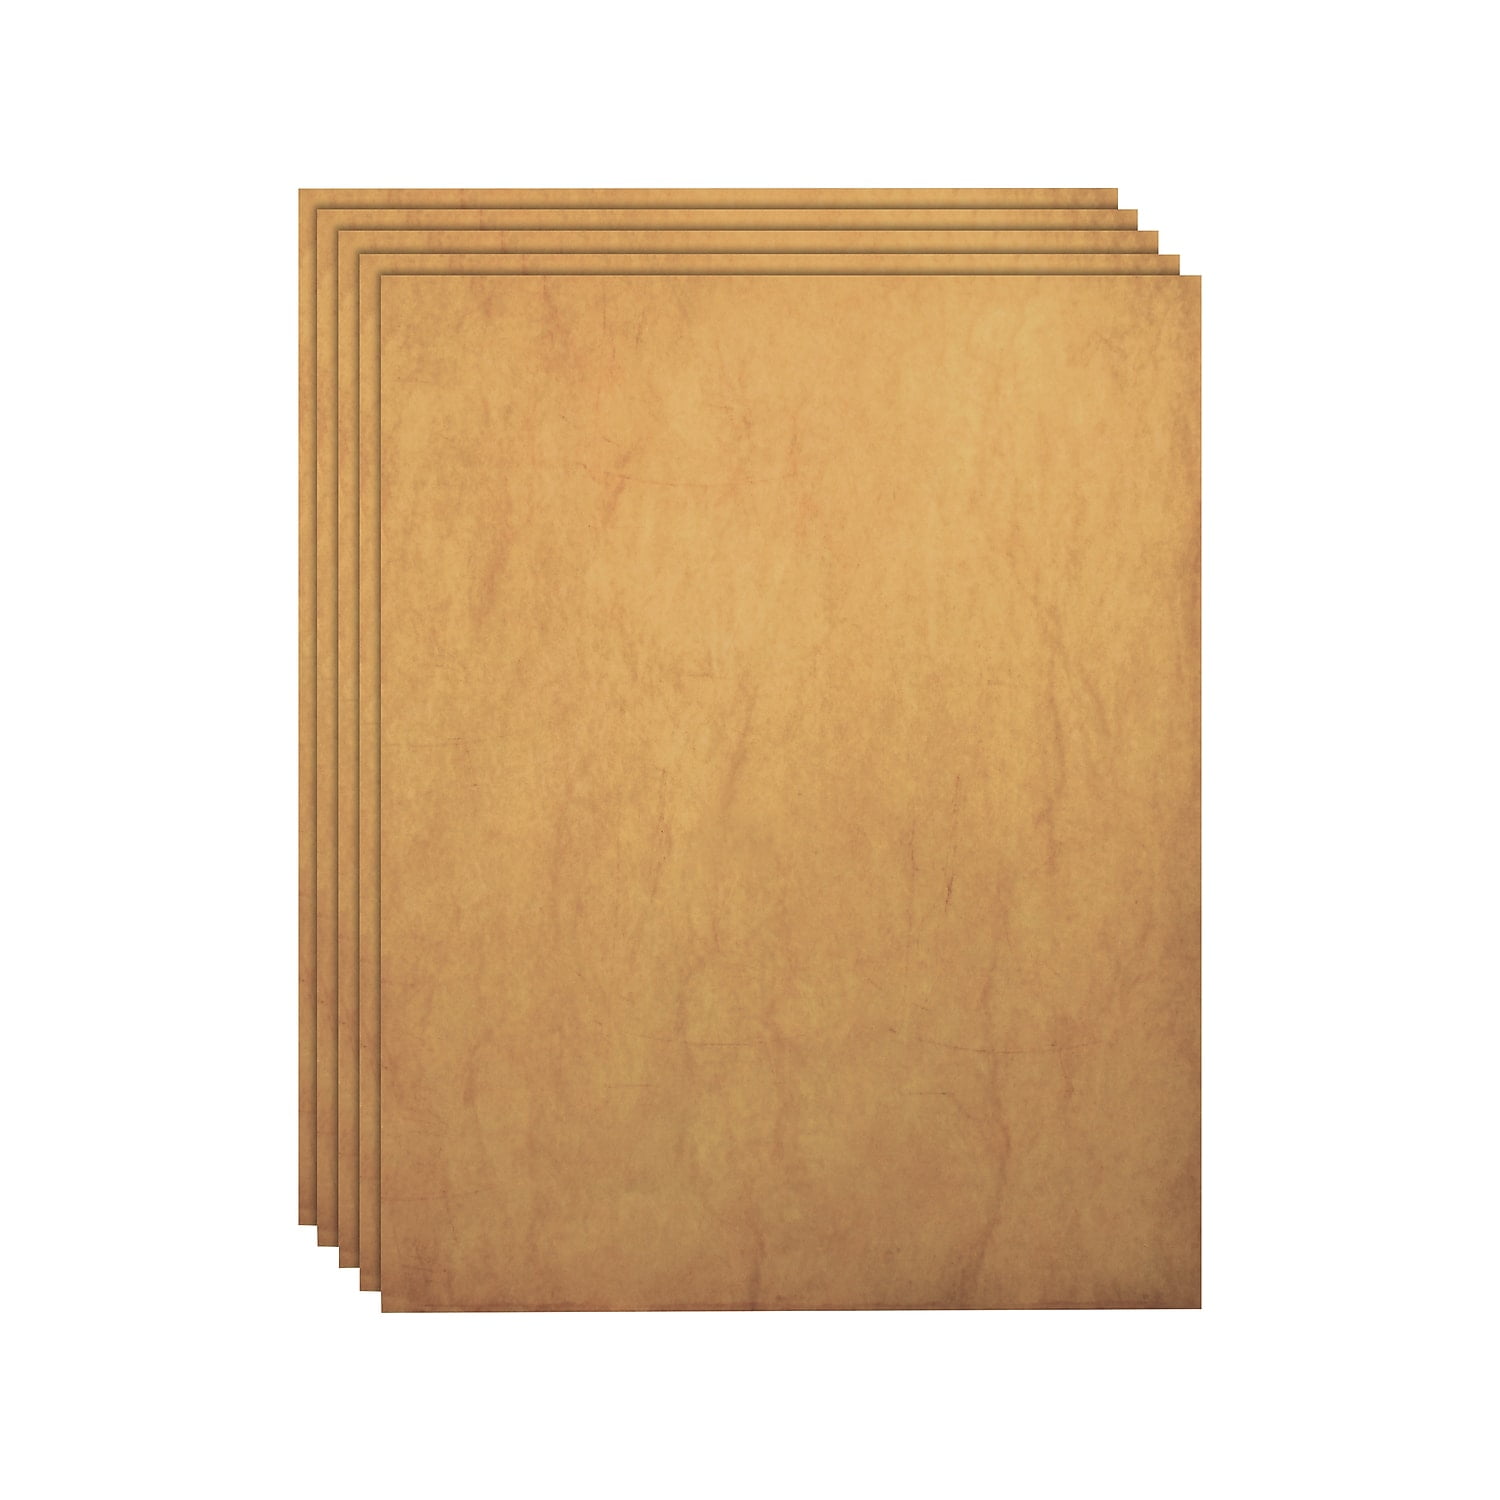 Better Office Design, Craft Paper - 8.5 x 11 Parchment, 48 Per Pack